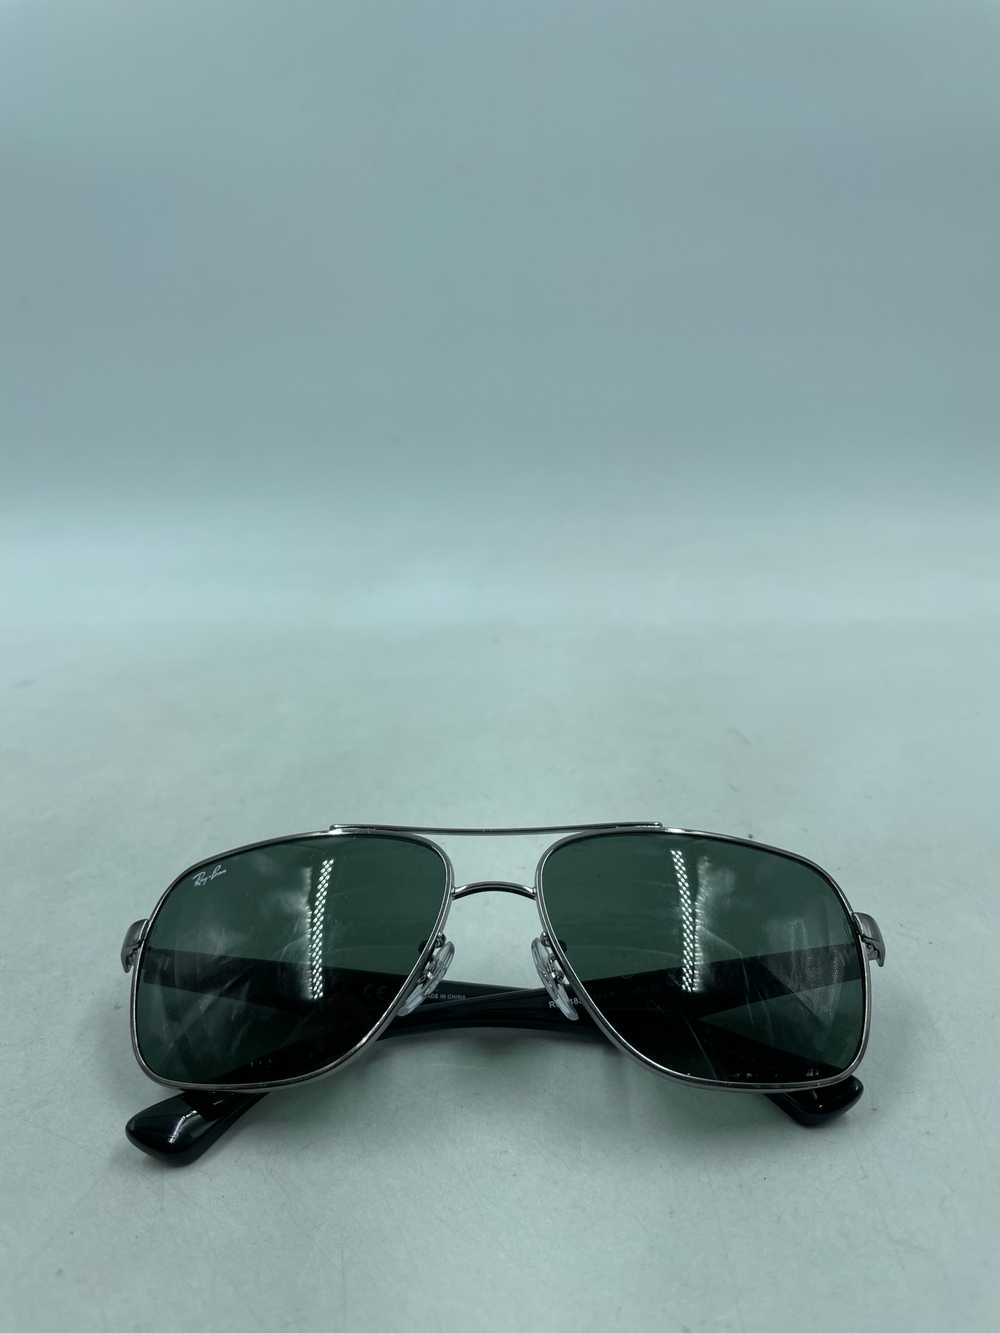 Ray-Ban Silver Pilot Sunglasses - image 1